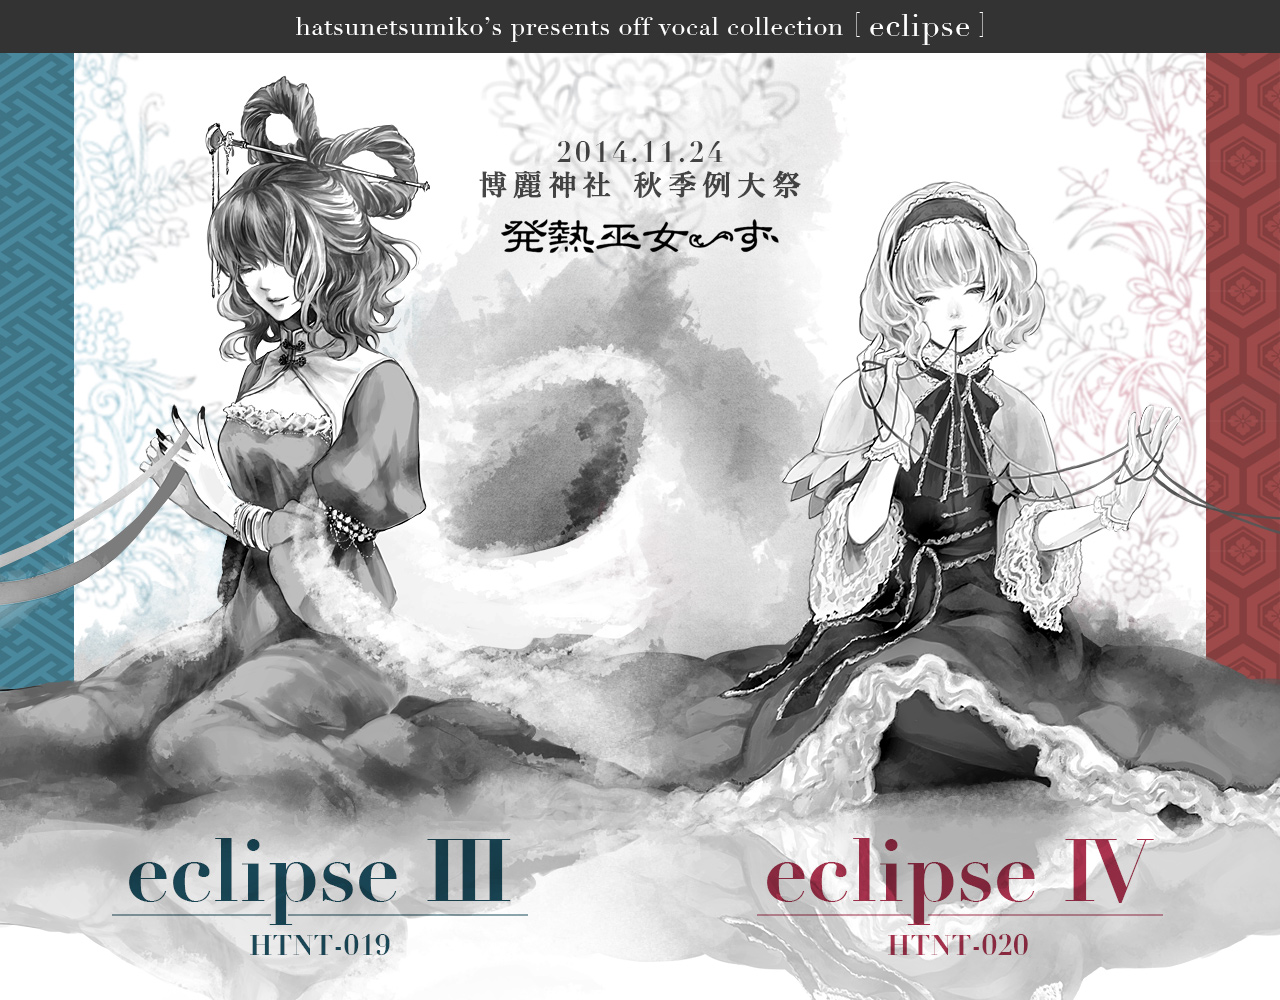 eclipse III |eclipse IV - 発熱巫女〜ず